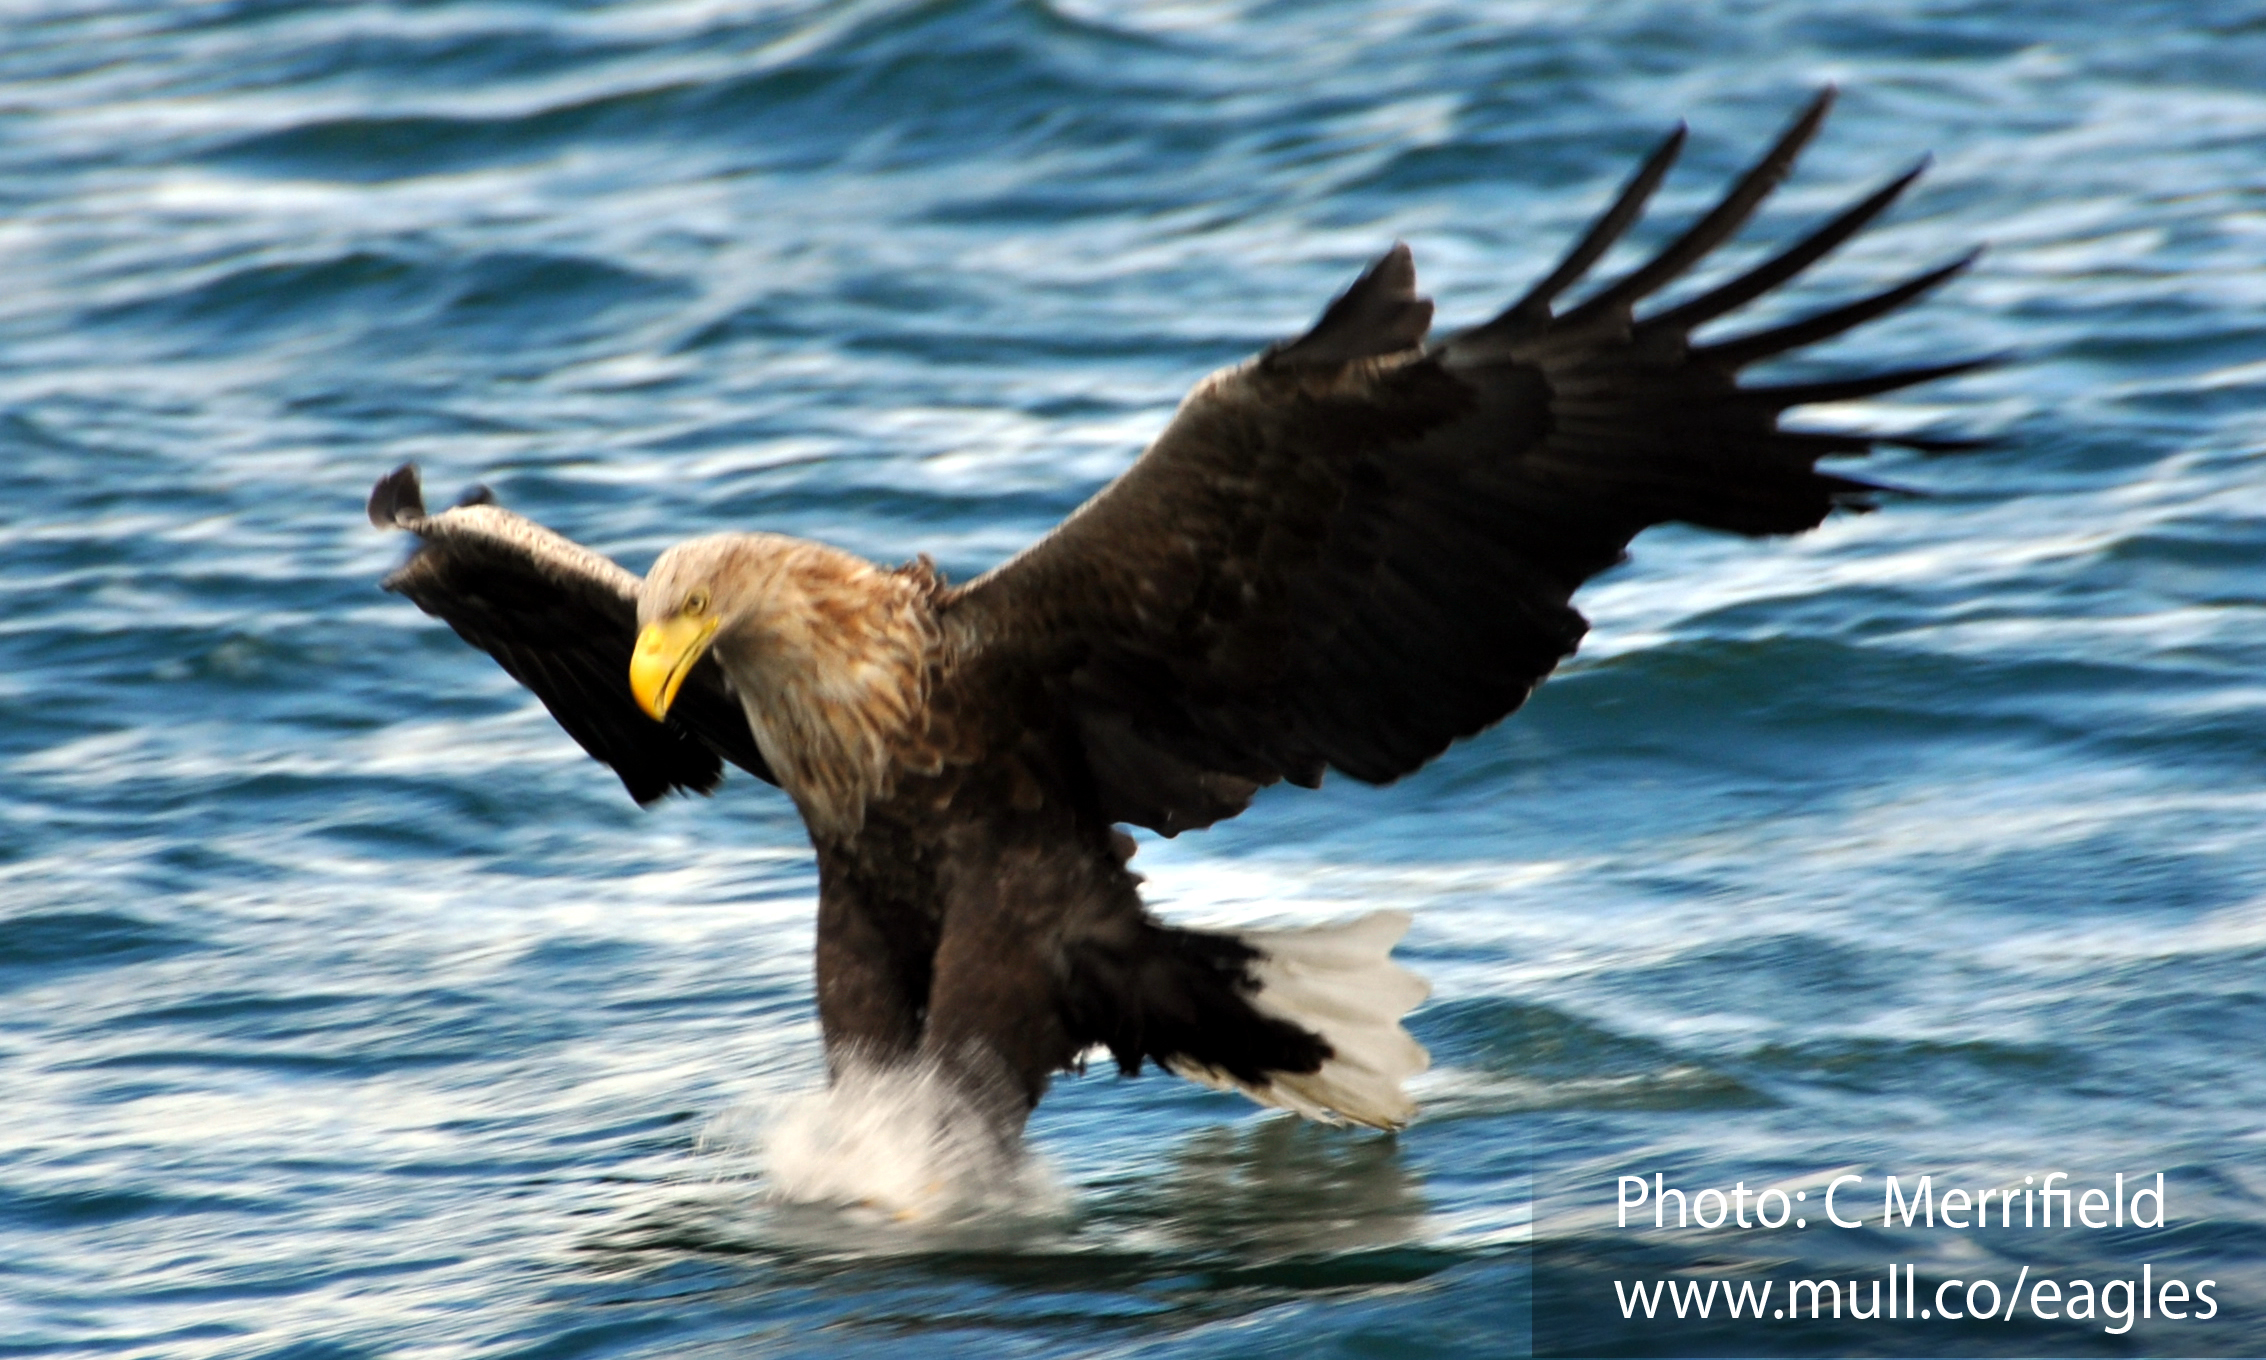 Mull sea eagle catching fish